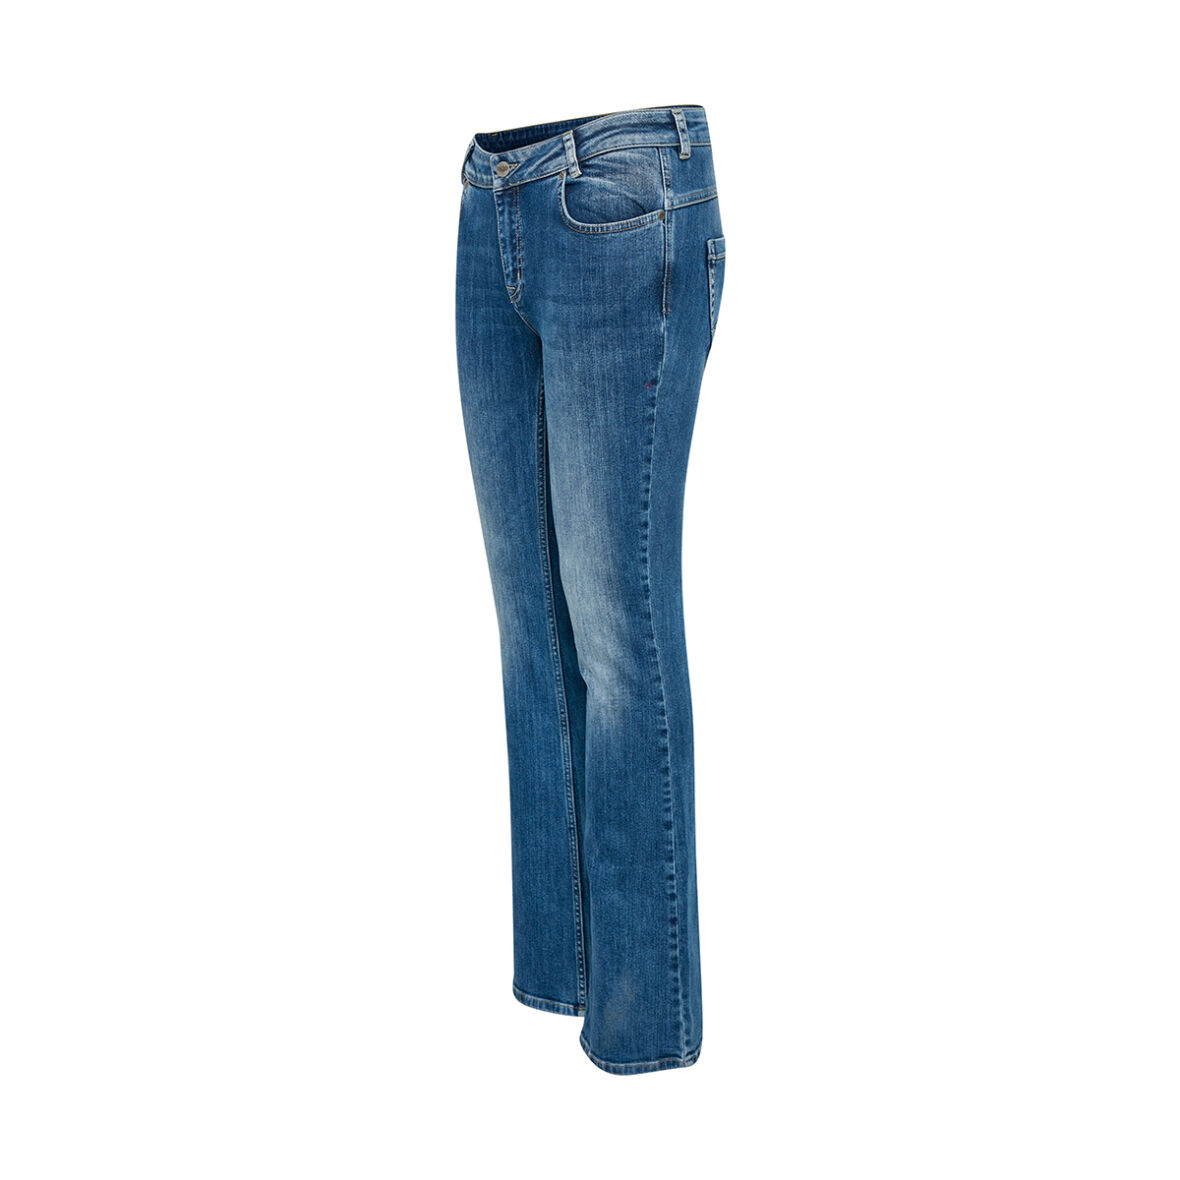 DENIM - Yara Bootcut Jeans Light Denim - Jydepotten.dk Fragt Over